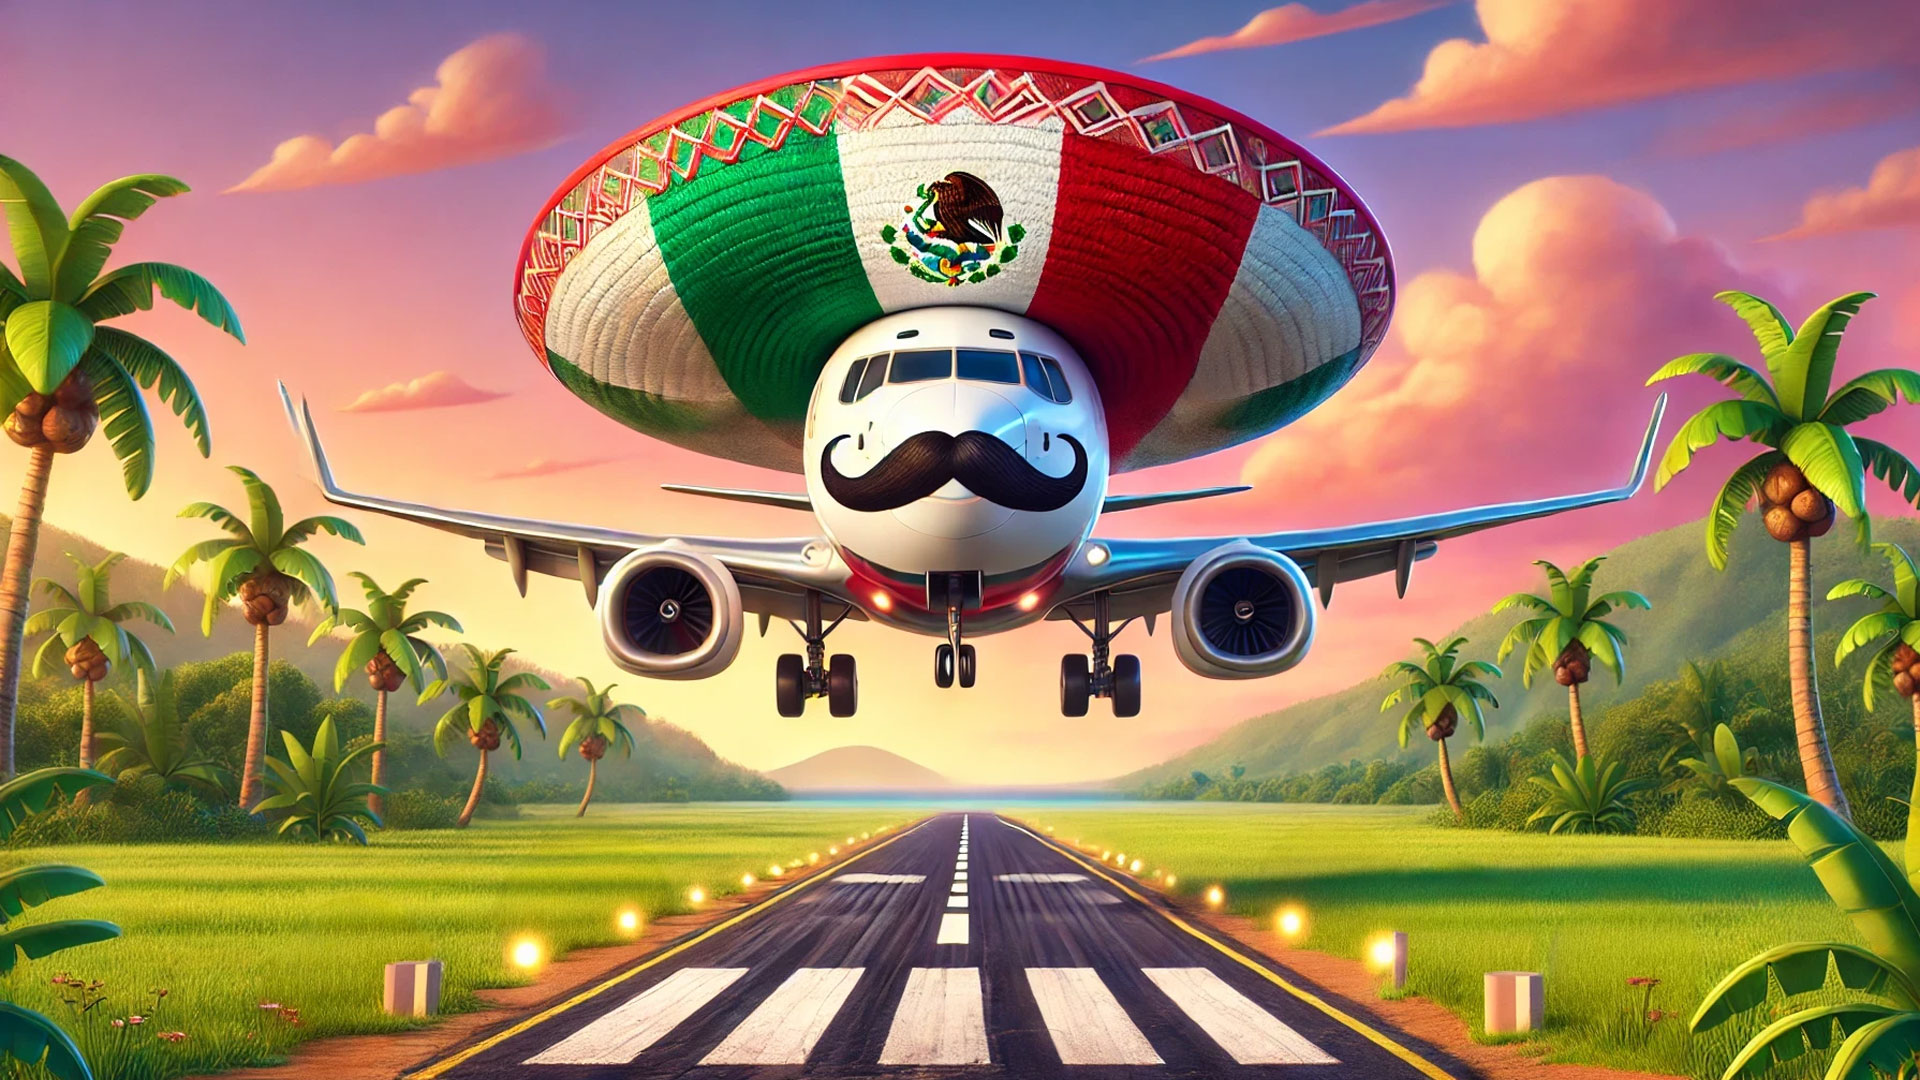 Volaris Announces Direct Air Route Between Guadalajara, Mexico to Costa Rica Expanding Bilateral Relations